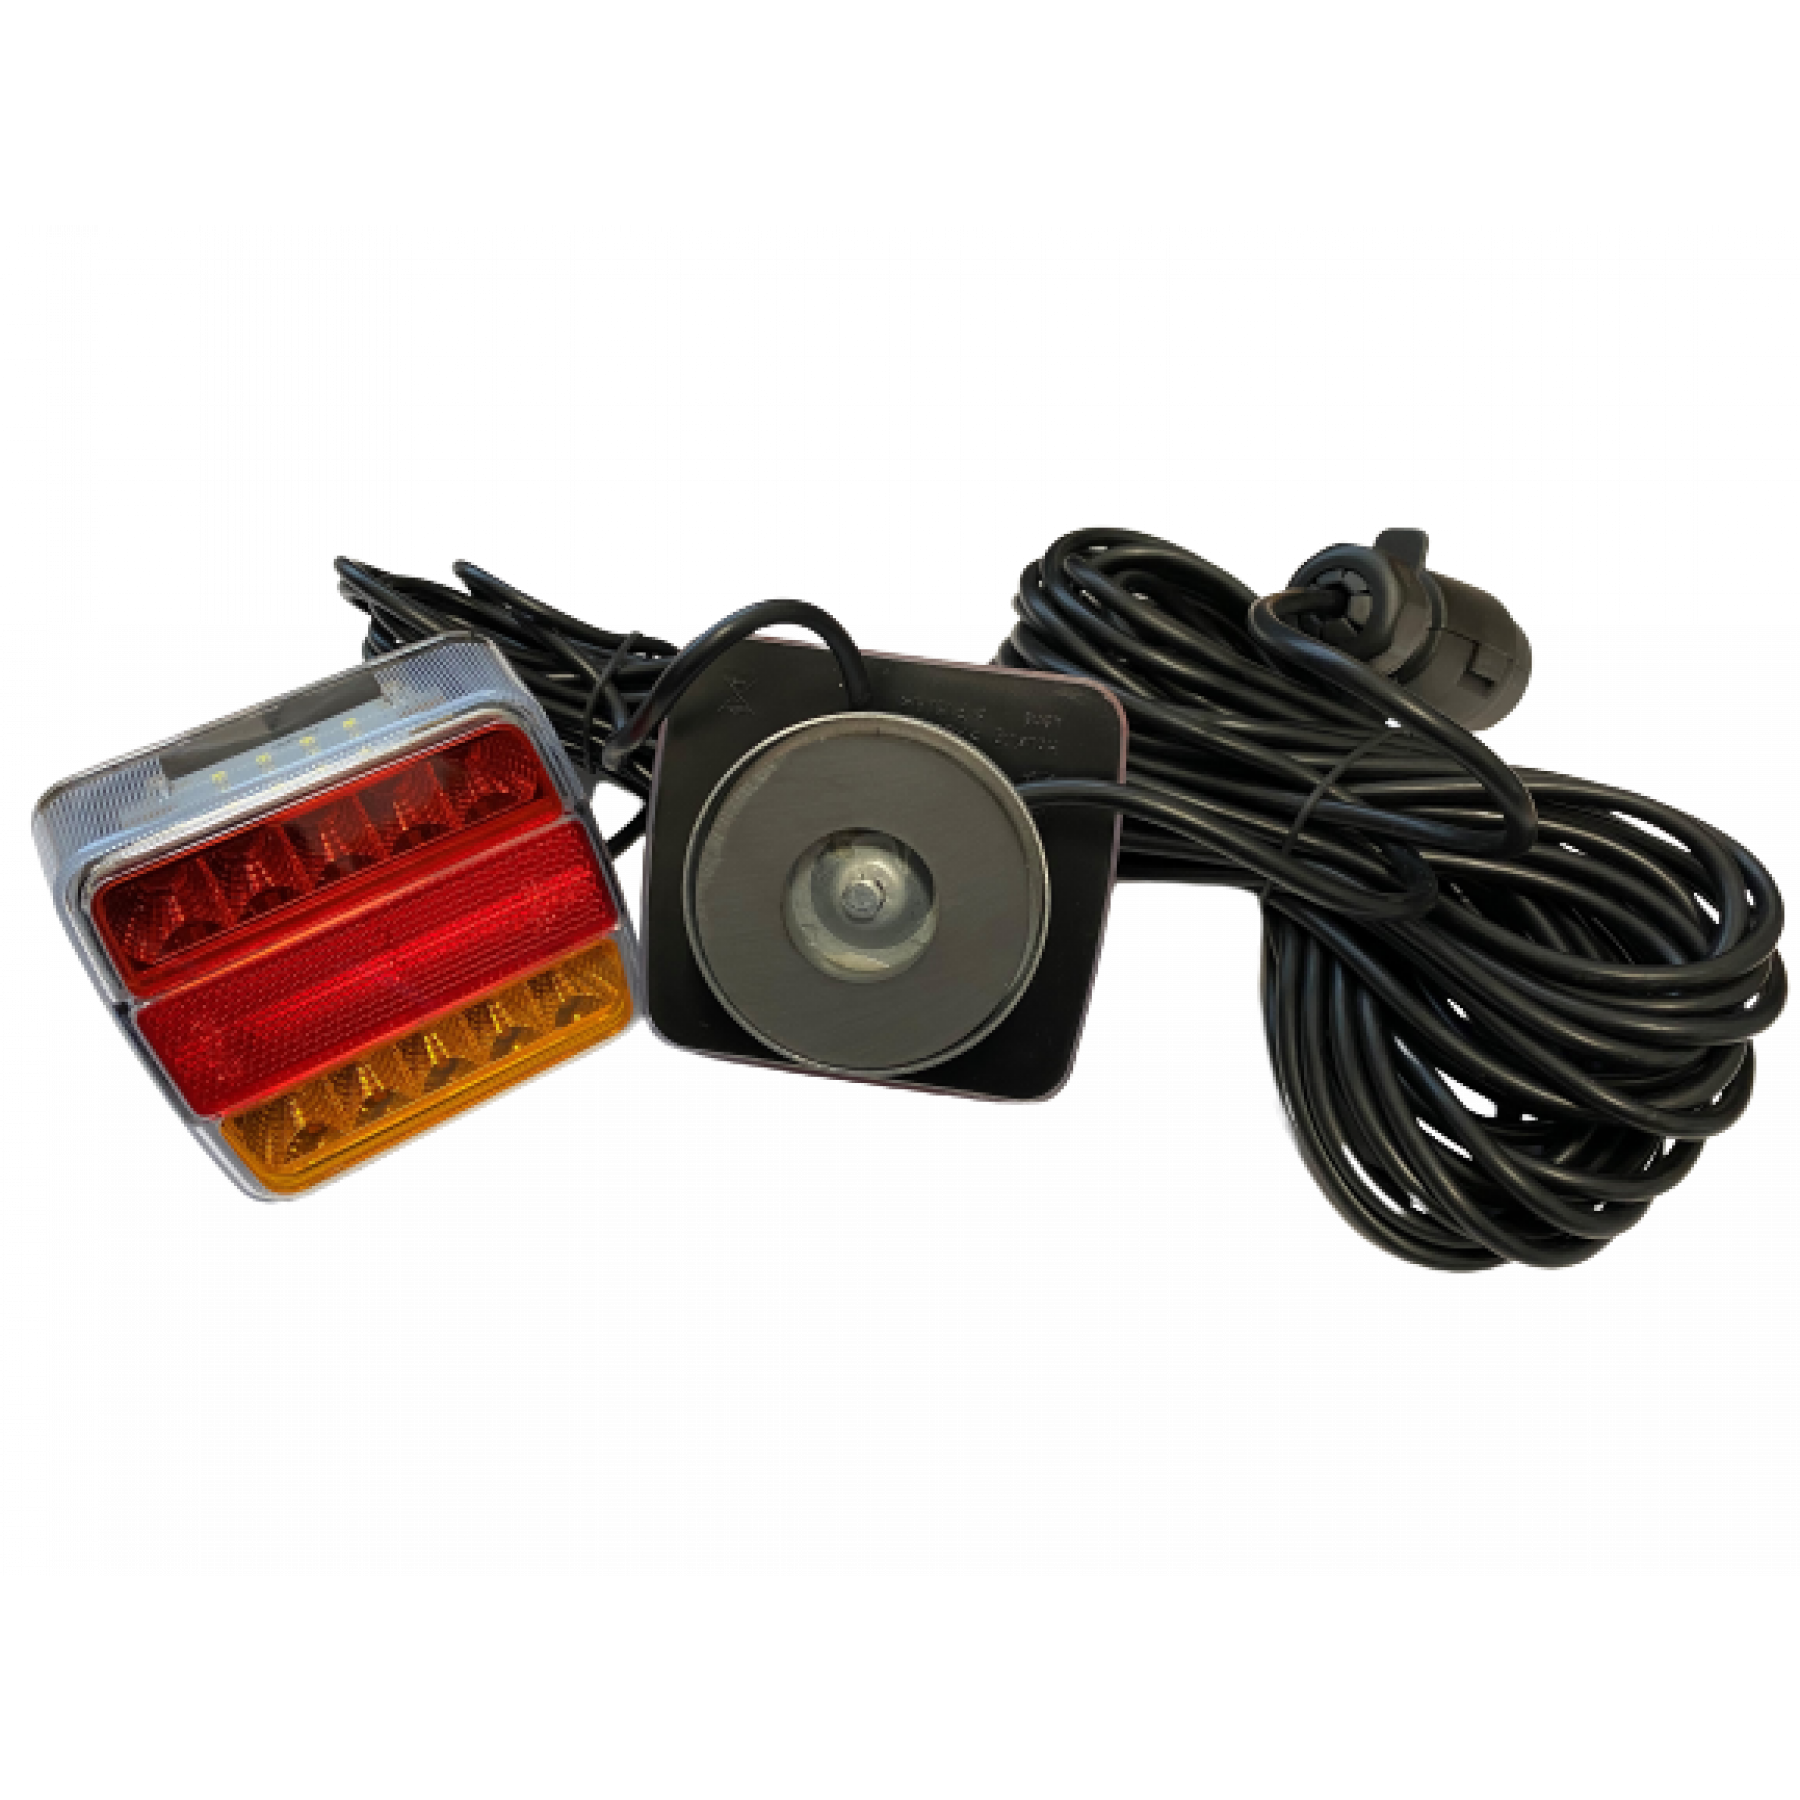 LED Achterlichtset magneet 12-24v Oranje/rood/rood 12m